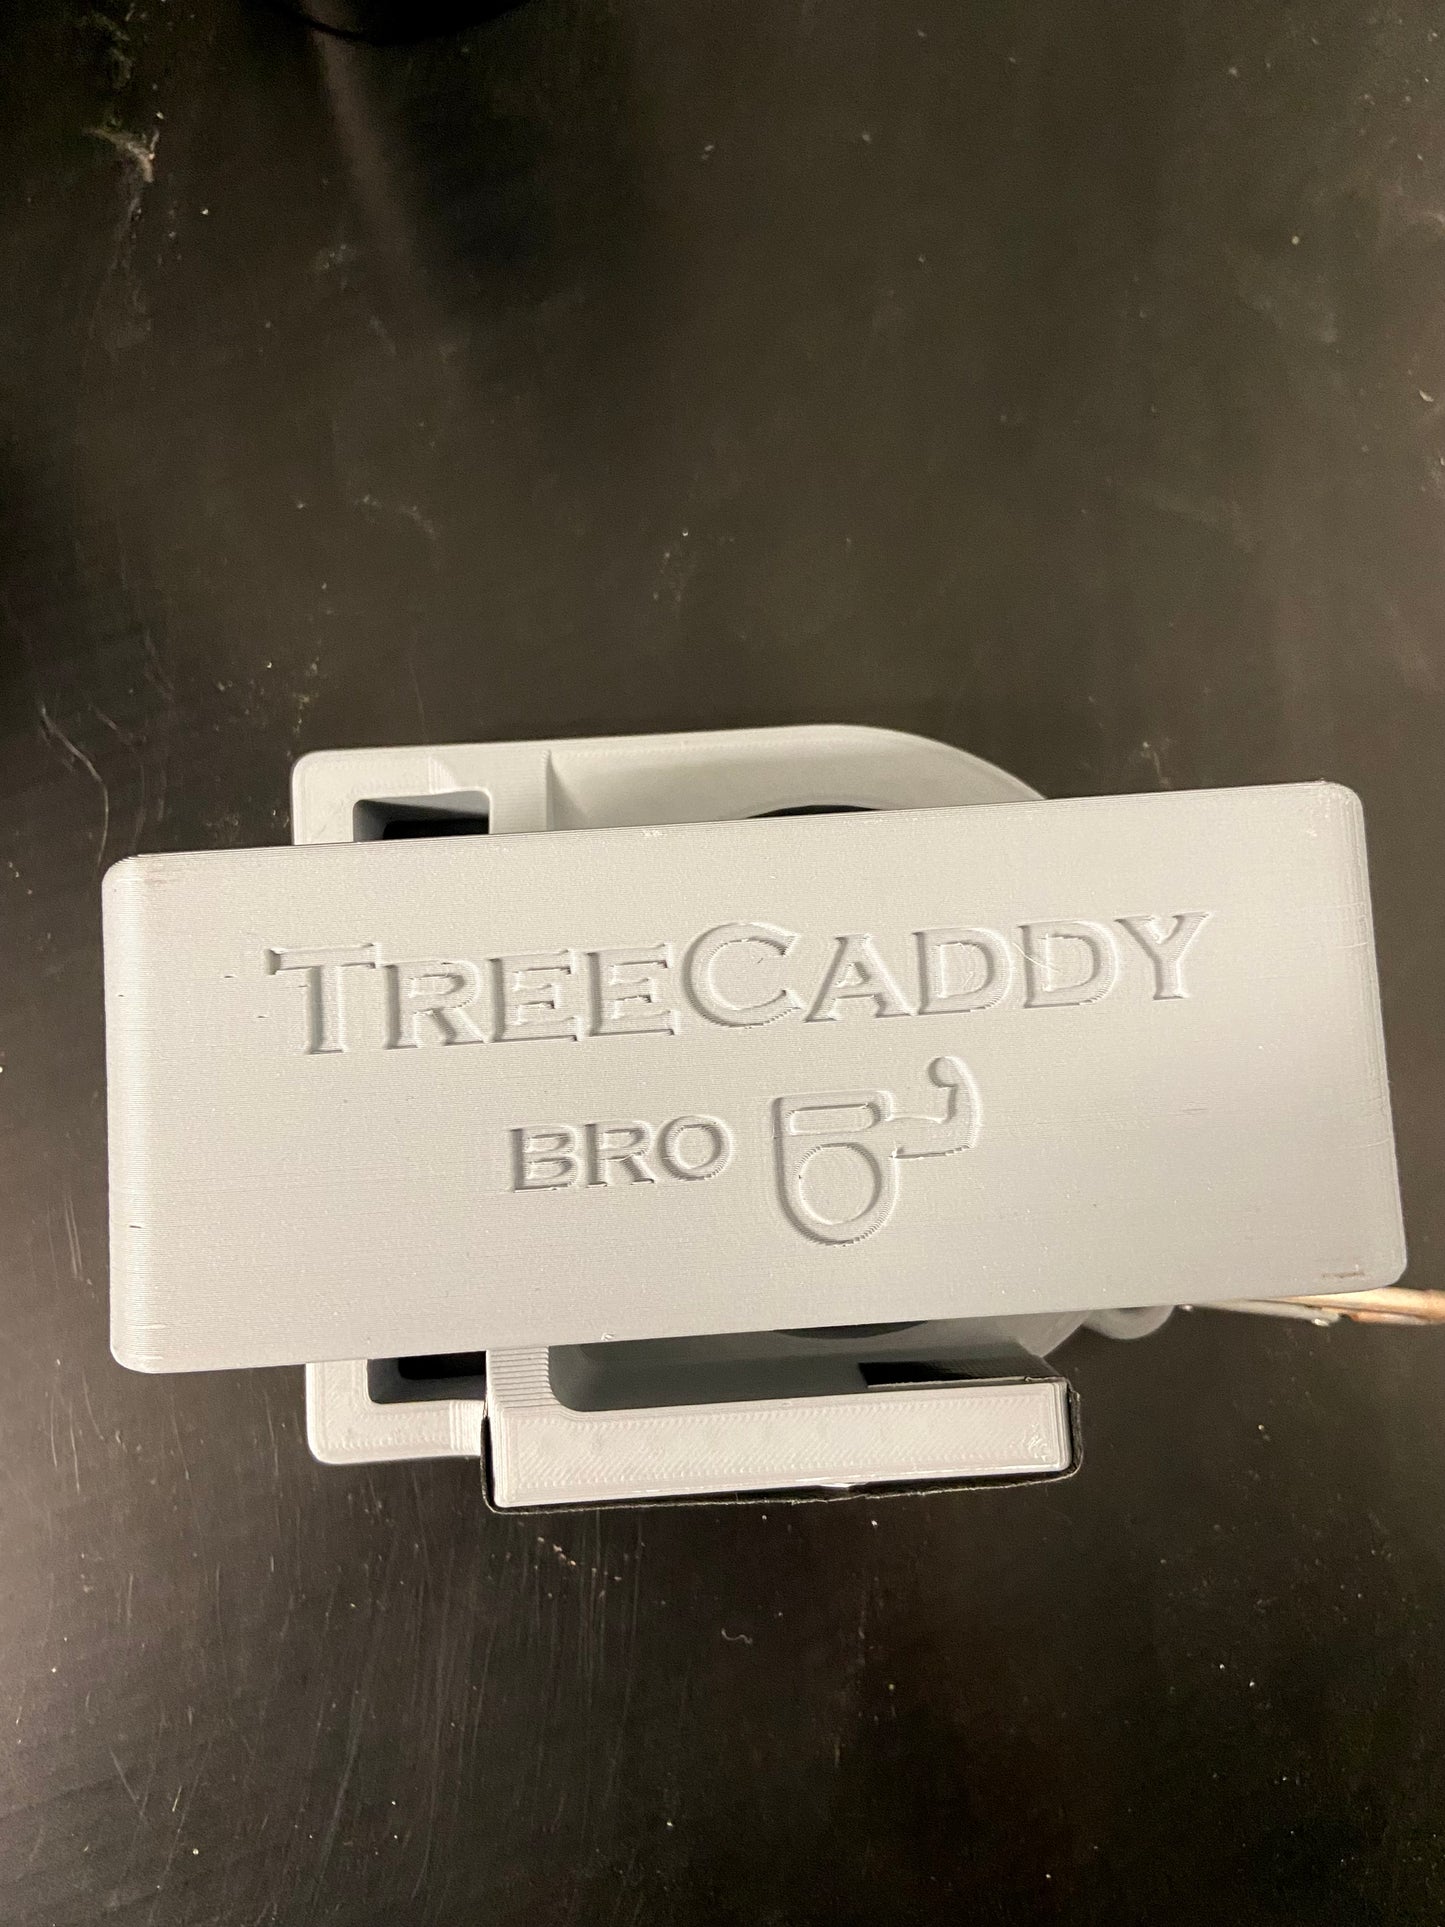 TreeCaddy Bro Cup Holder